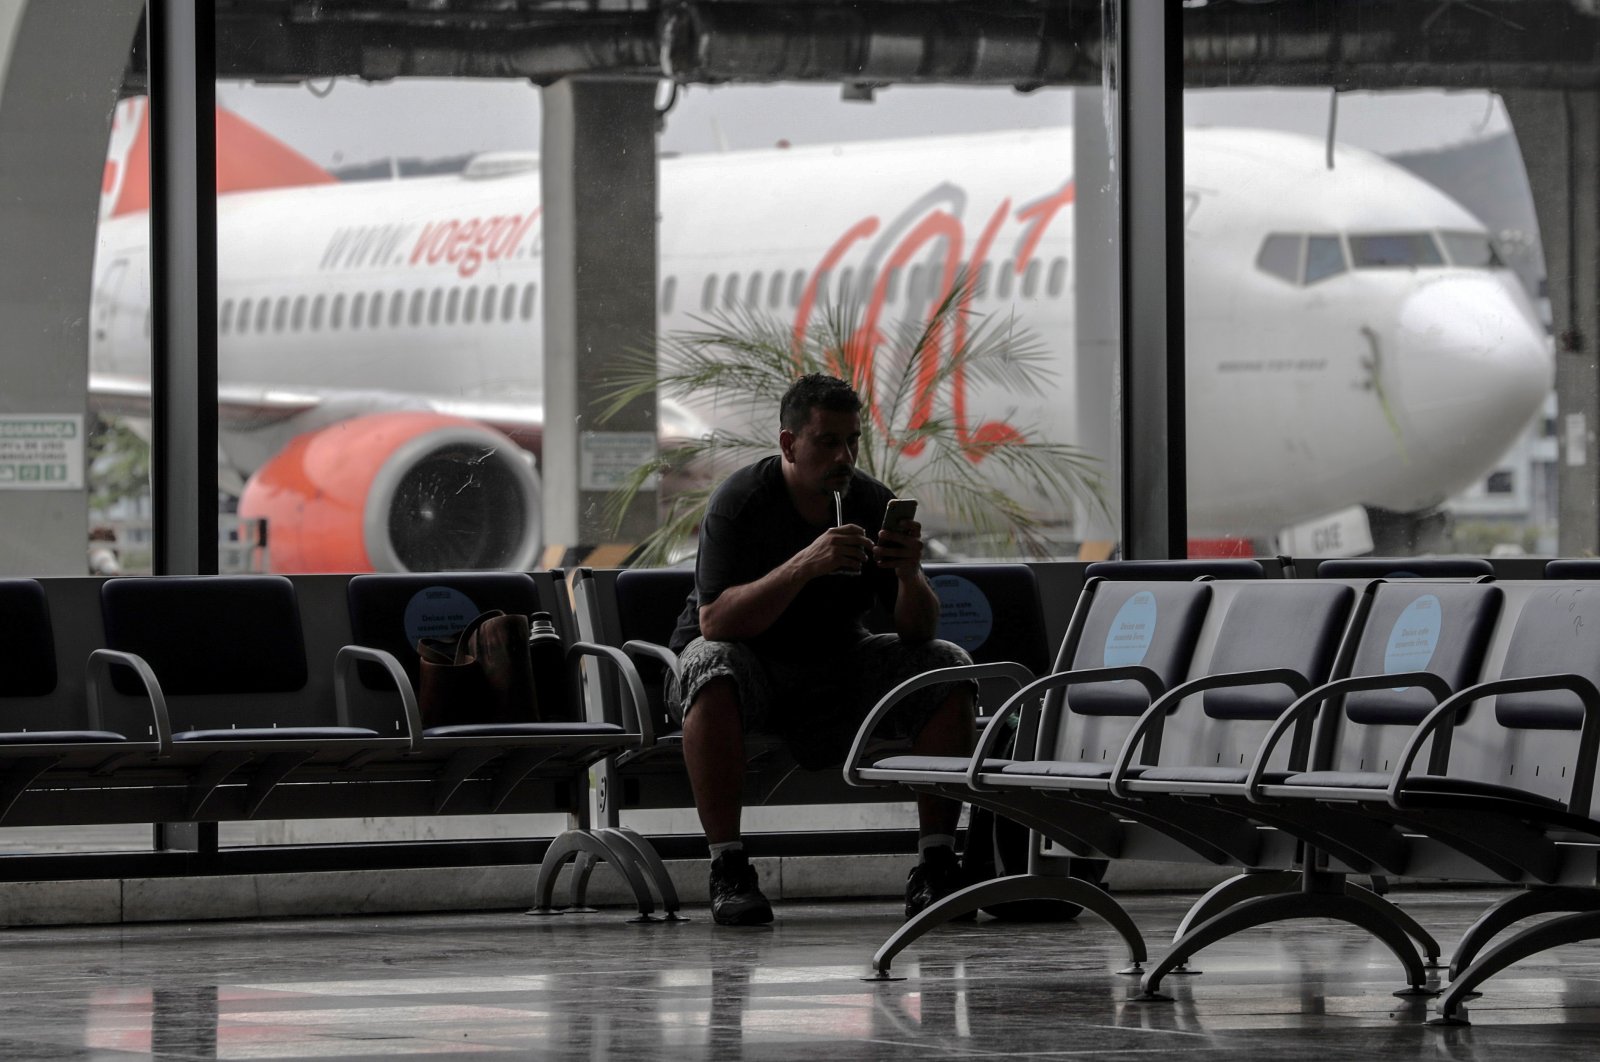 A man checks his phone in a waiting room at Santos Dumont airport, in Rio de Janeiro, Brazil, Aug. 20, 2020. (EPA Photo)